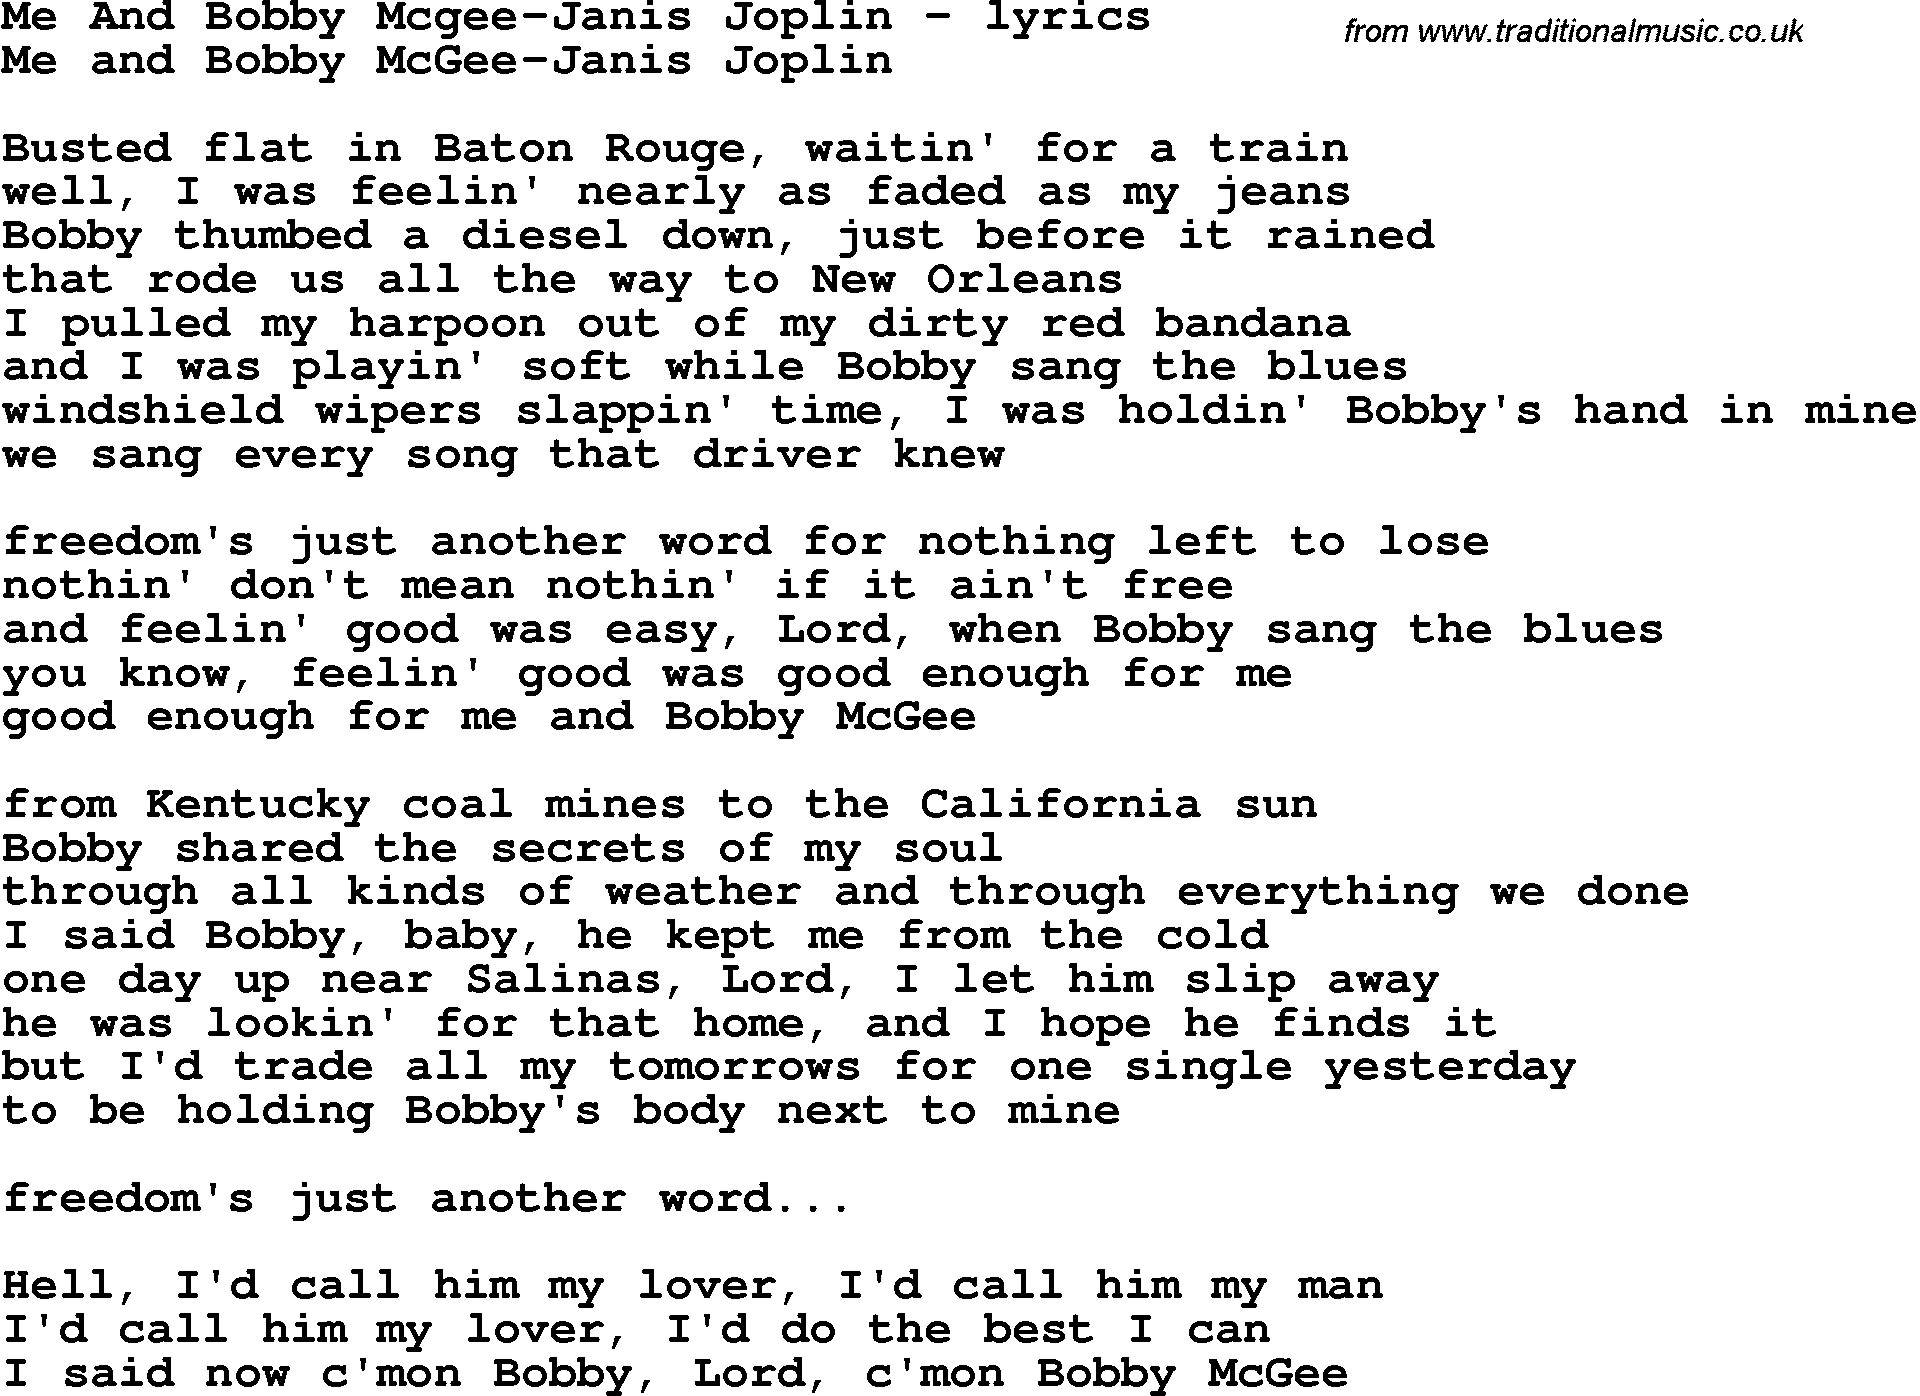 Love Song Lyrics for: Me And Bobby Mcgee-Janis Joplin